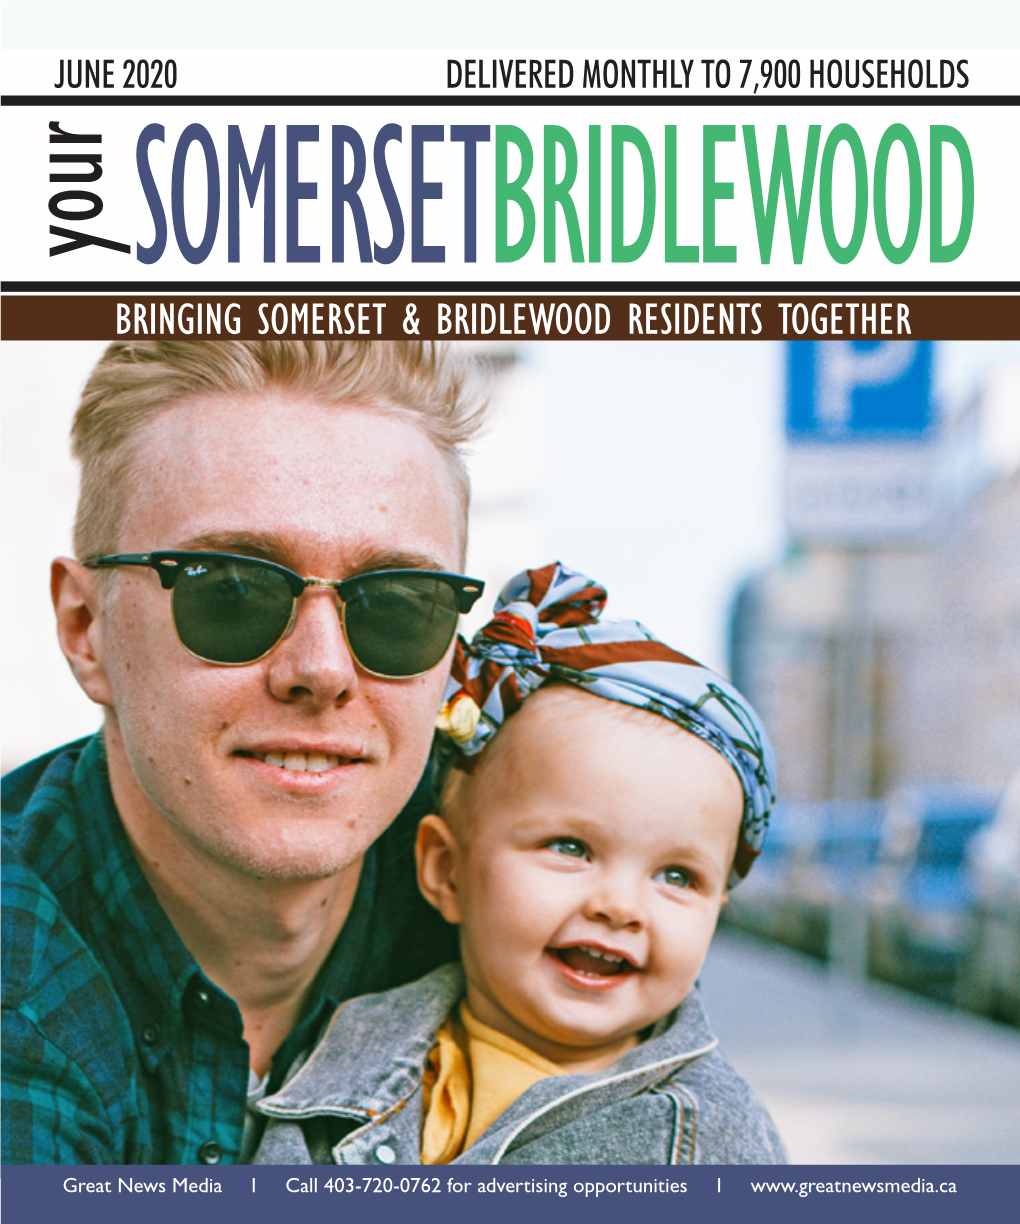 Bringing Somerset & Bridlewood Residents